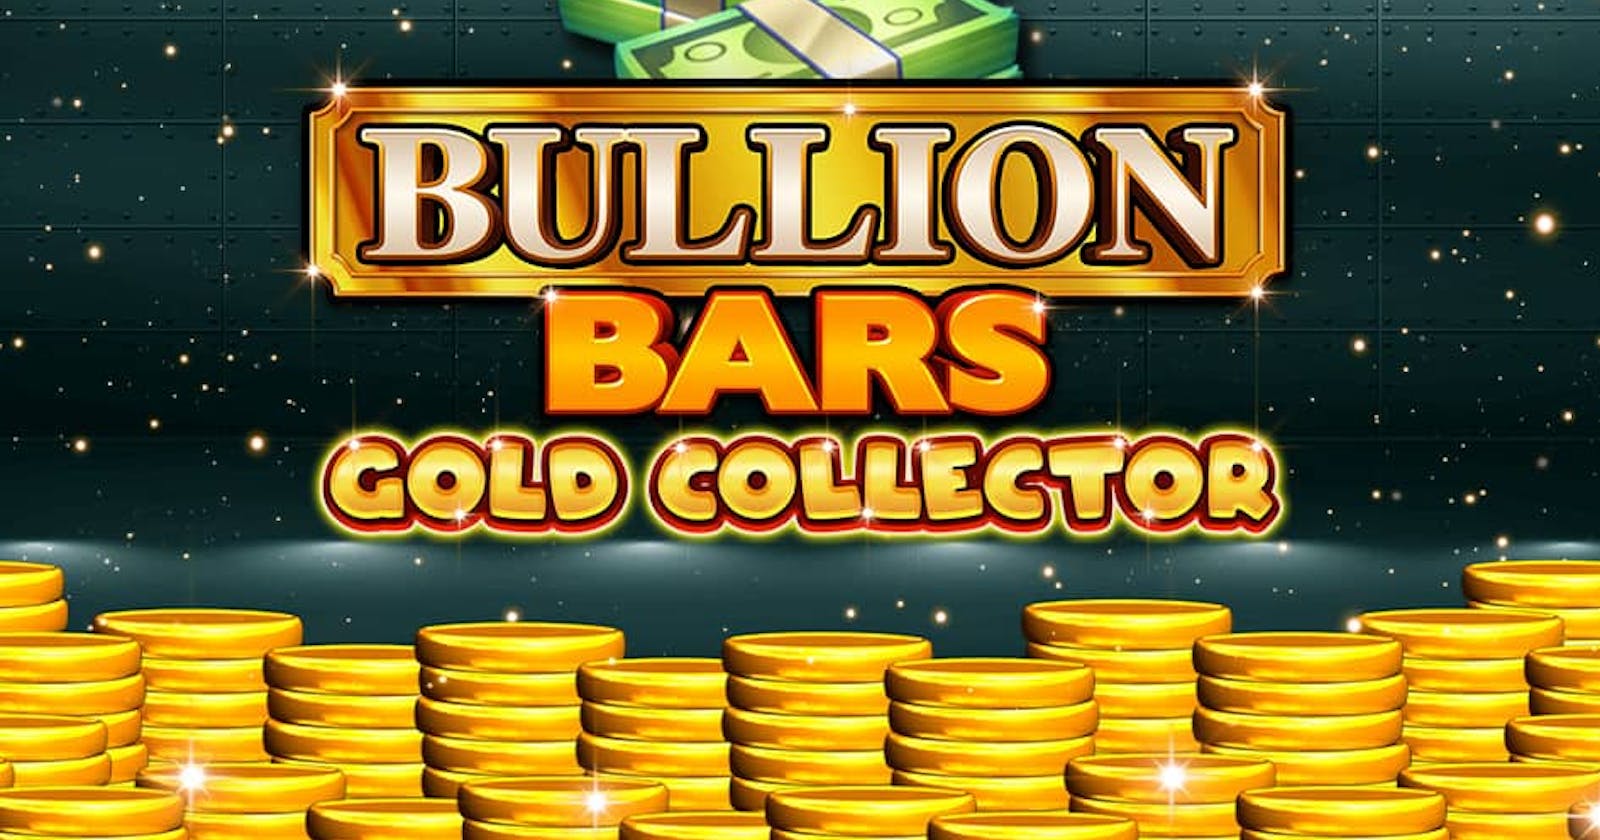 Bullion Bars Grab the Gold Slot Reviews: RTP, Volatility and Bonus Features